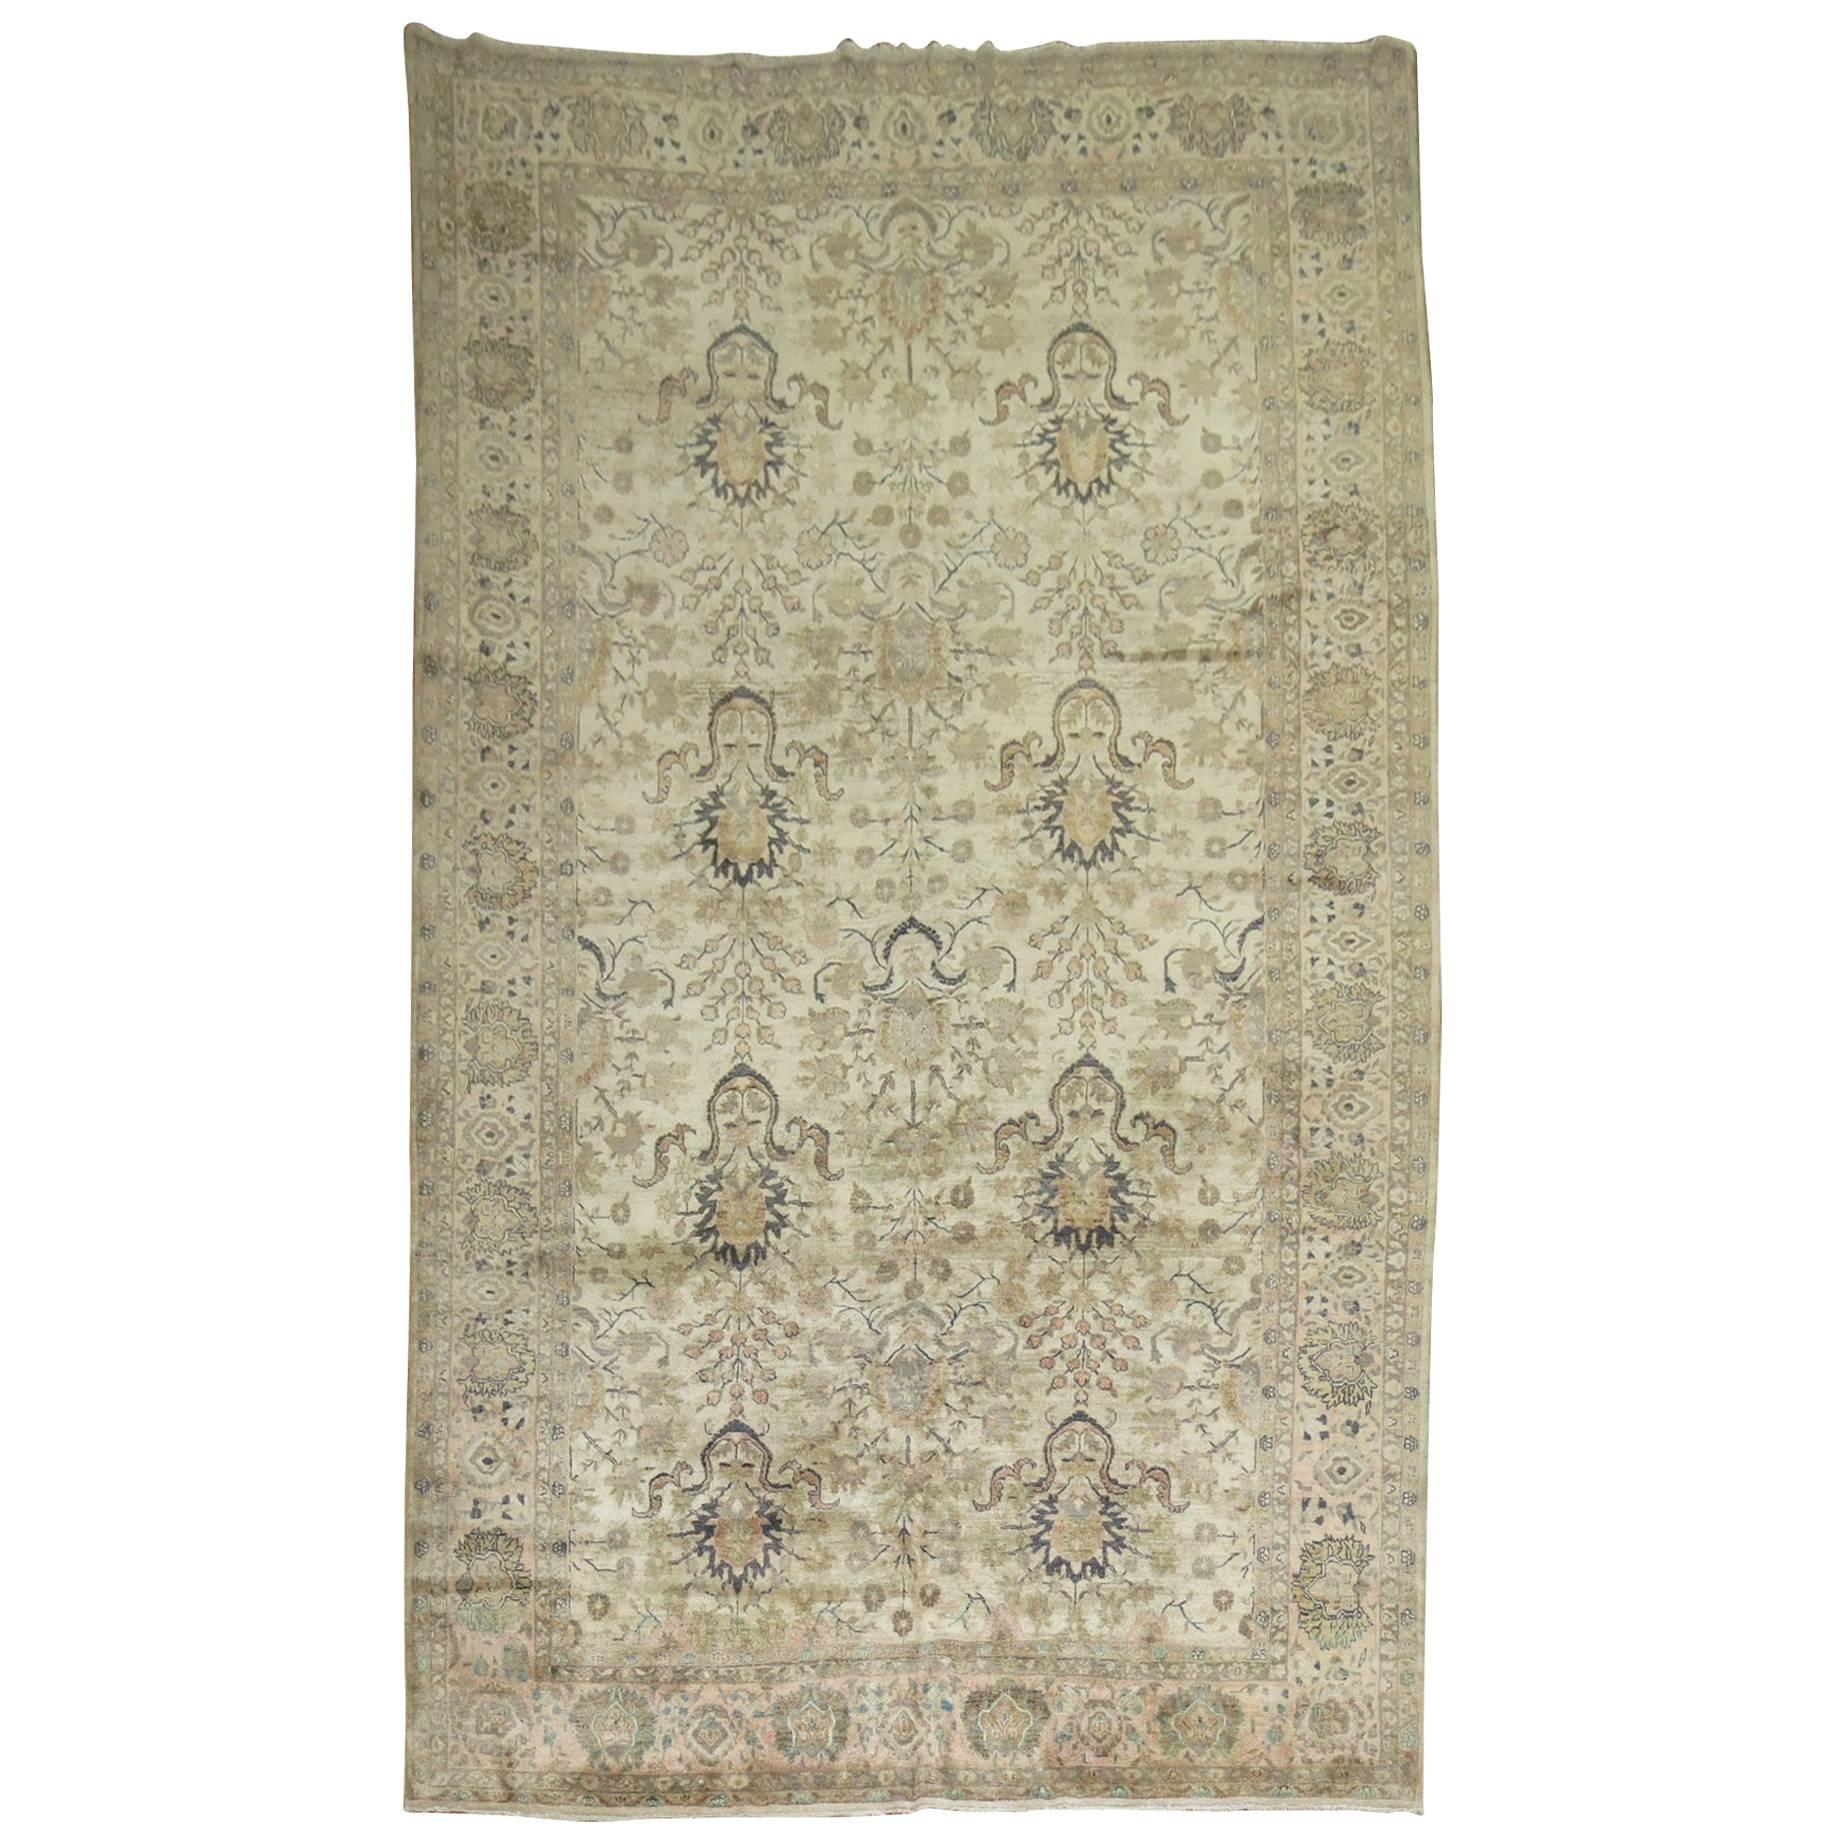 Antique Persian Ferehan Carpet